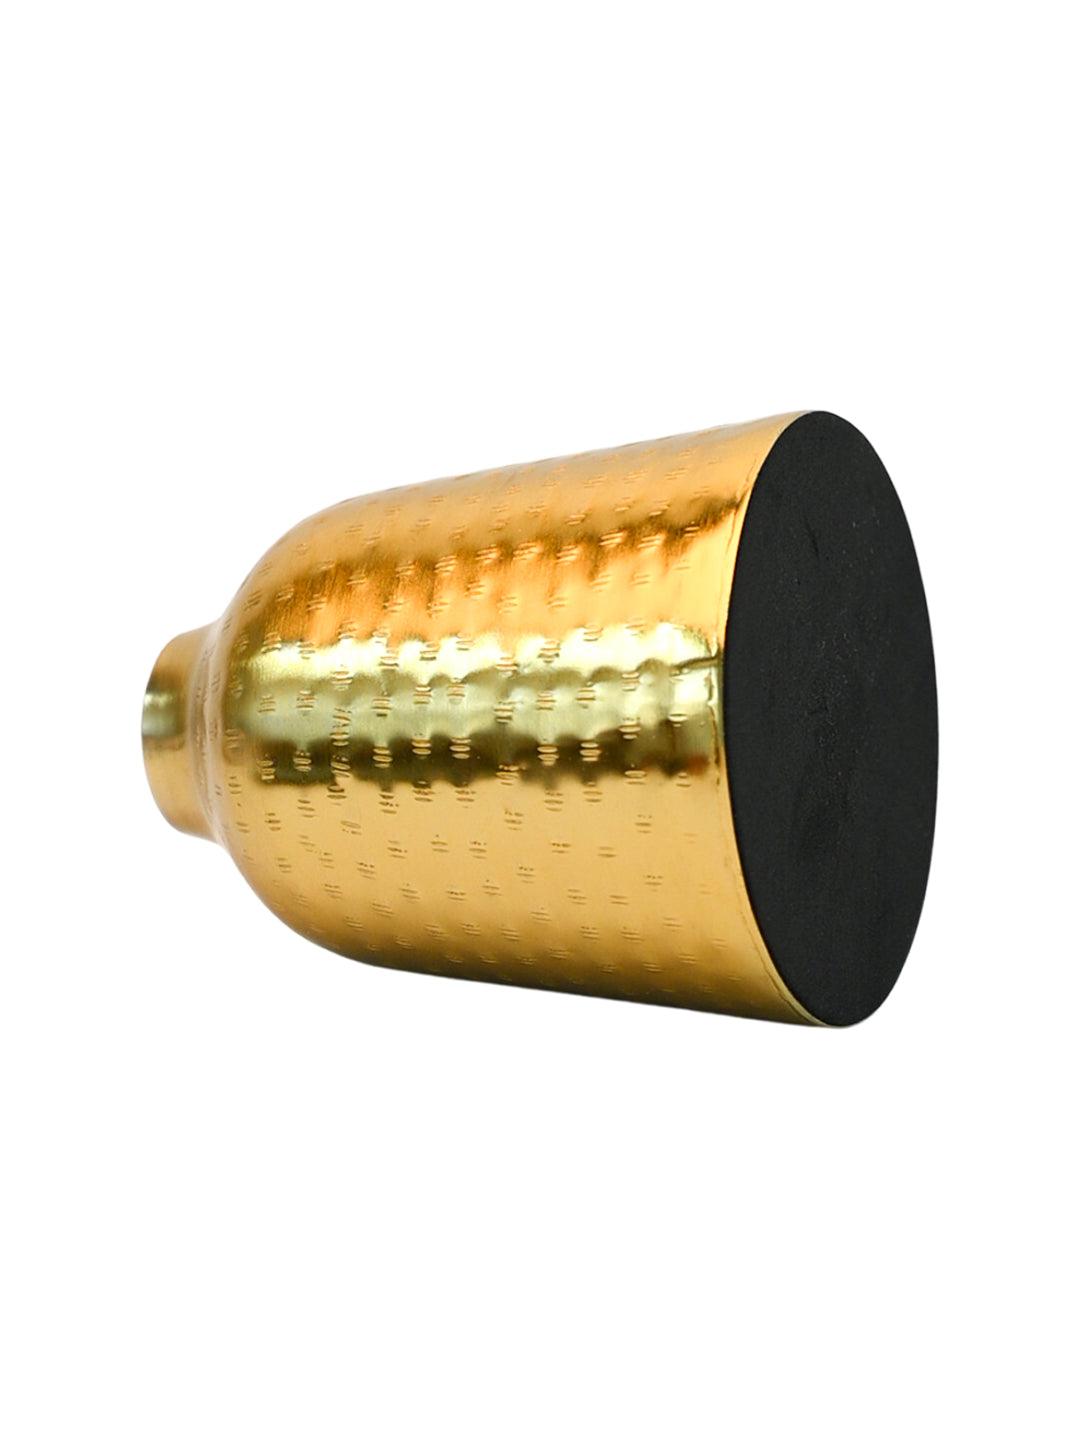 Decorative Rice Hammer Vase - Golden, Mason Shape